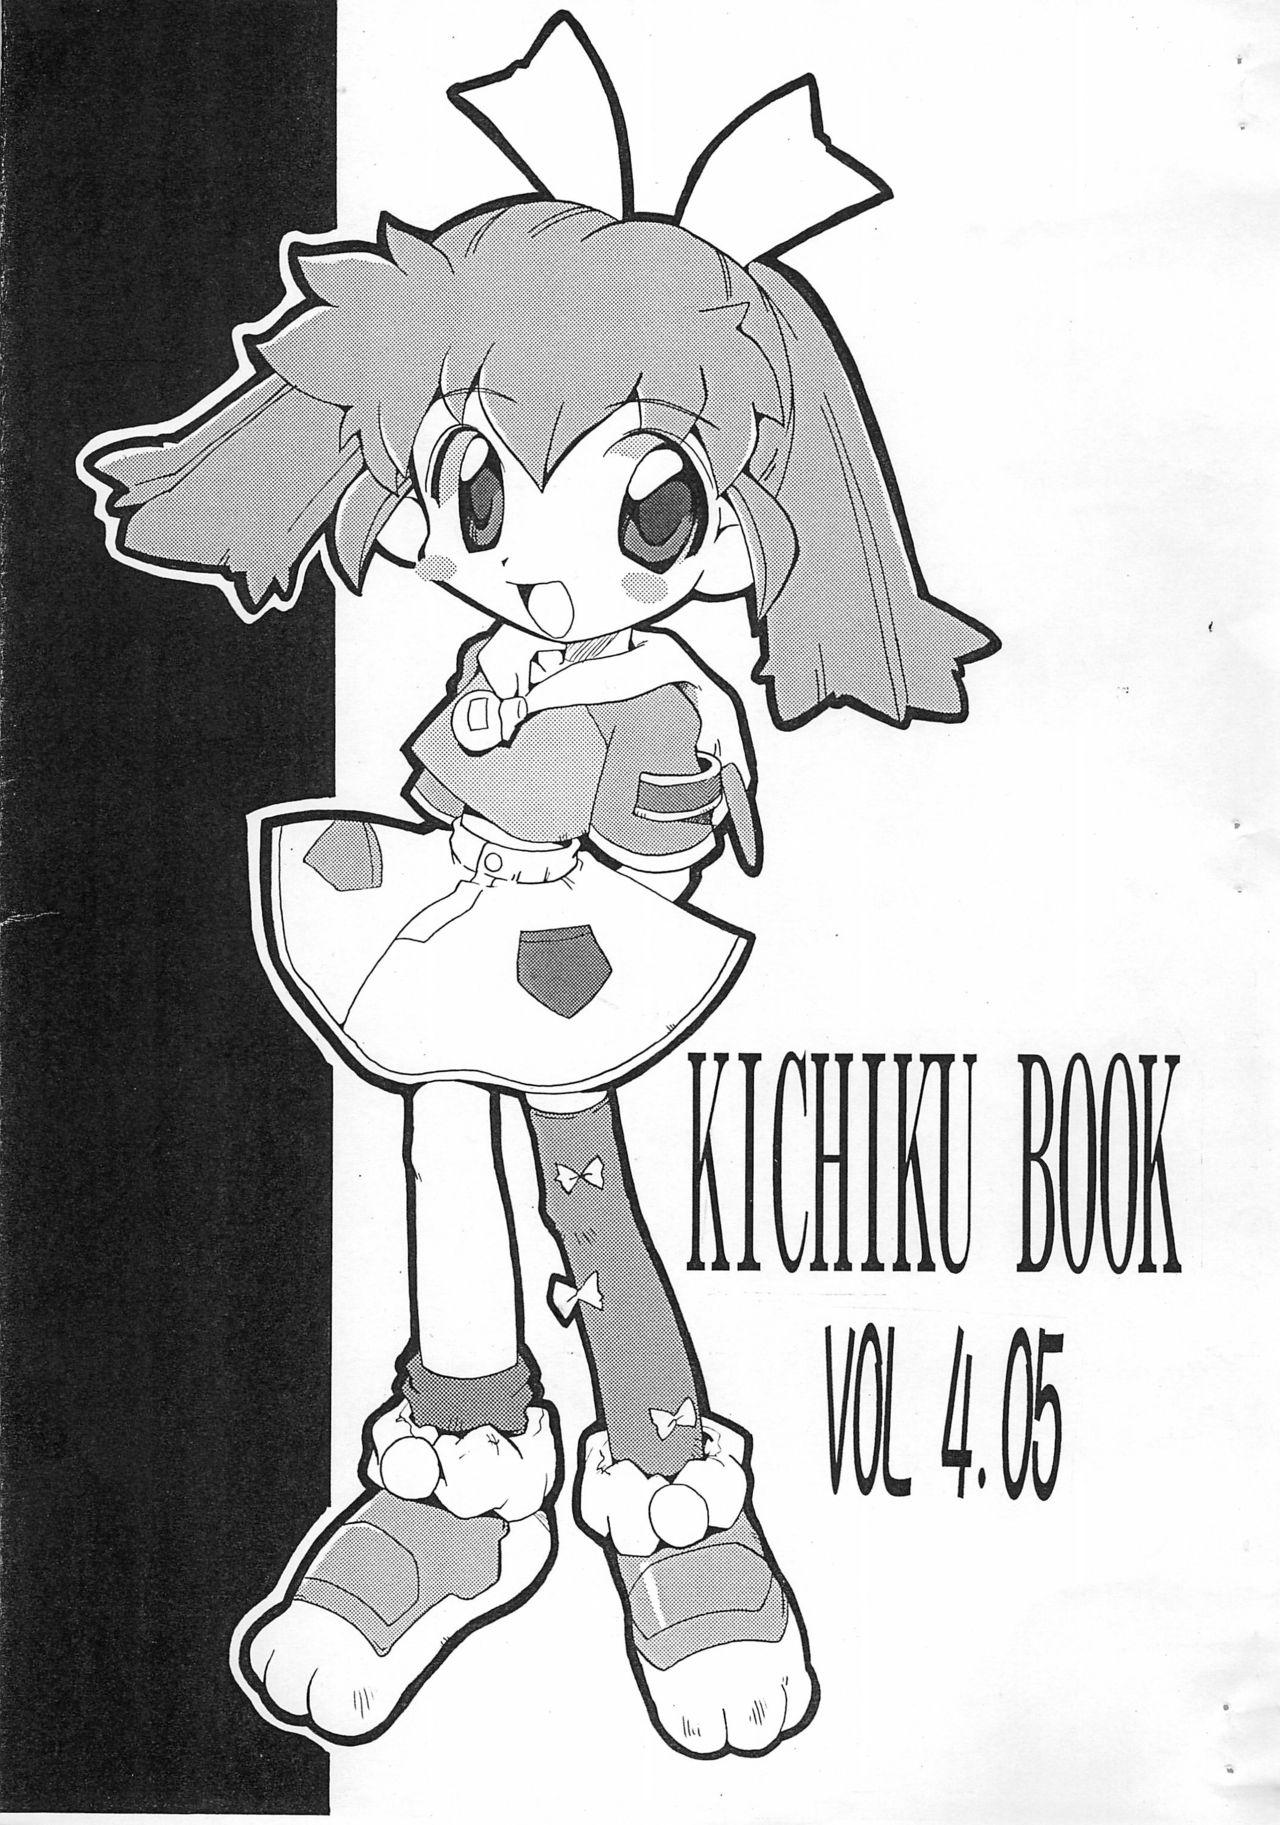 KICHIKU BOOK VOL4.05 0